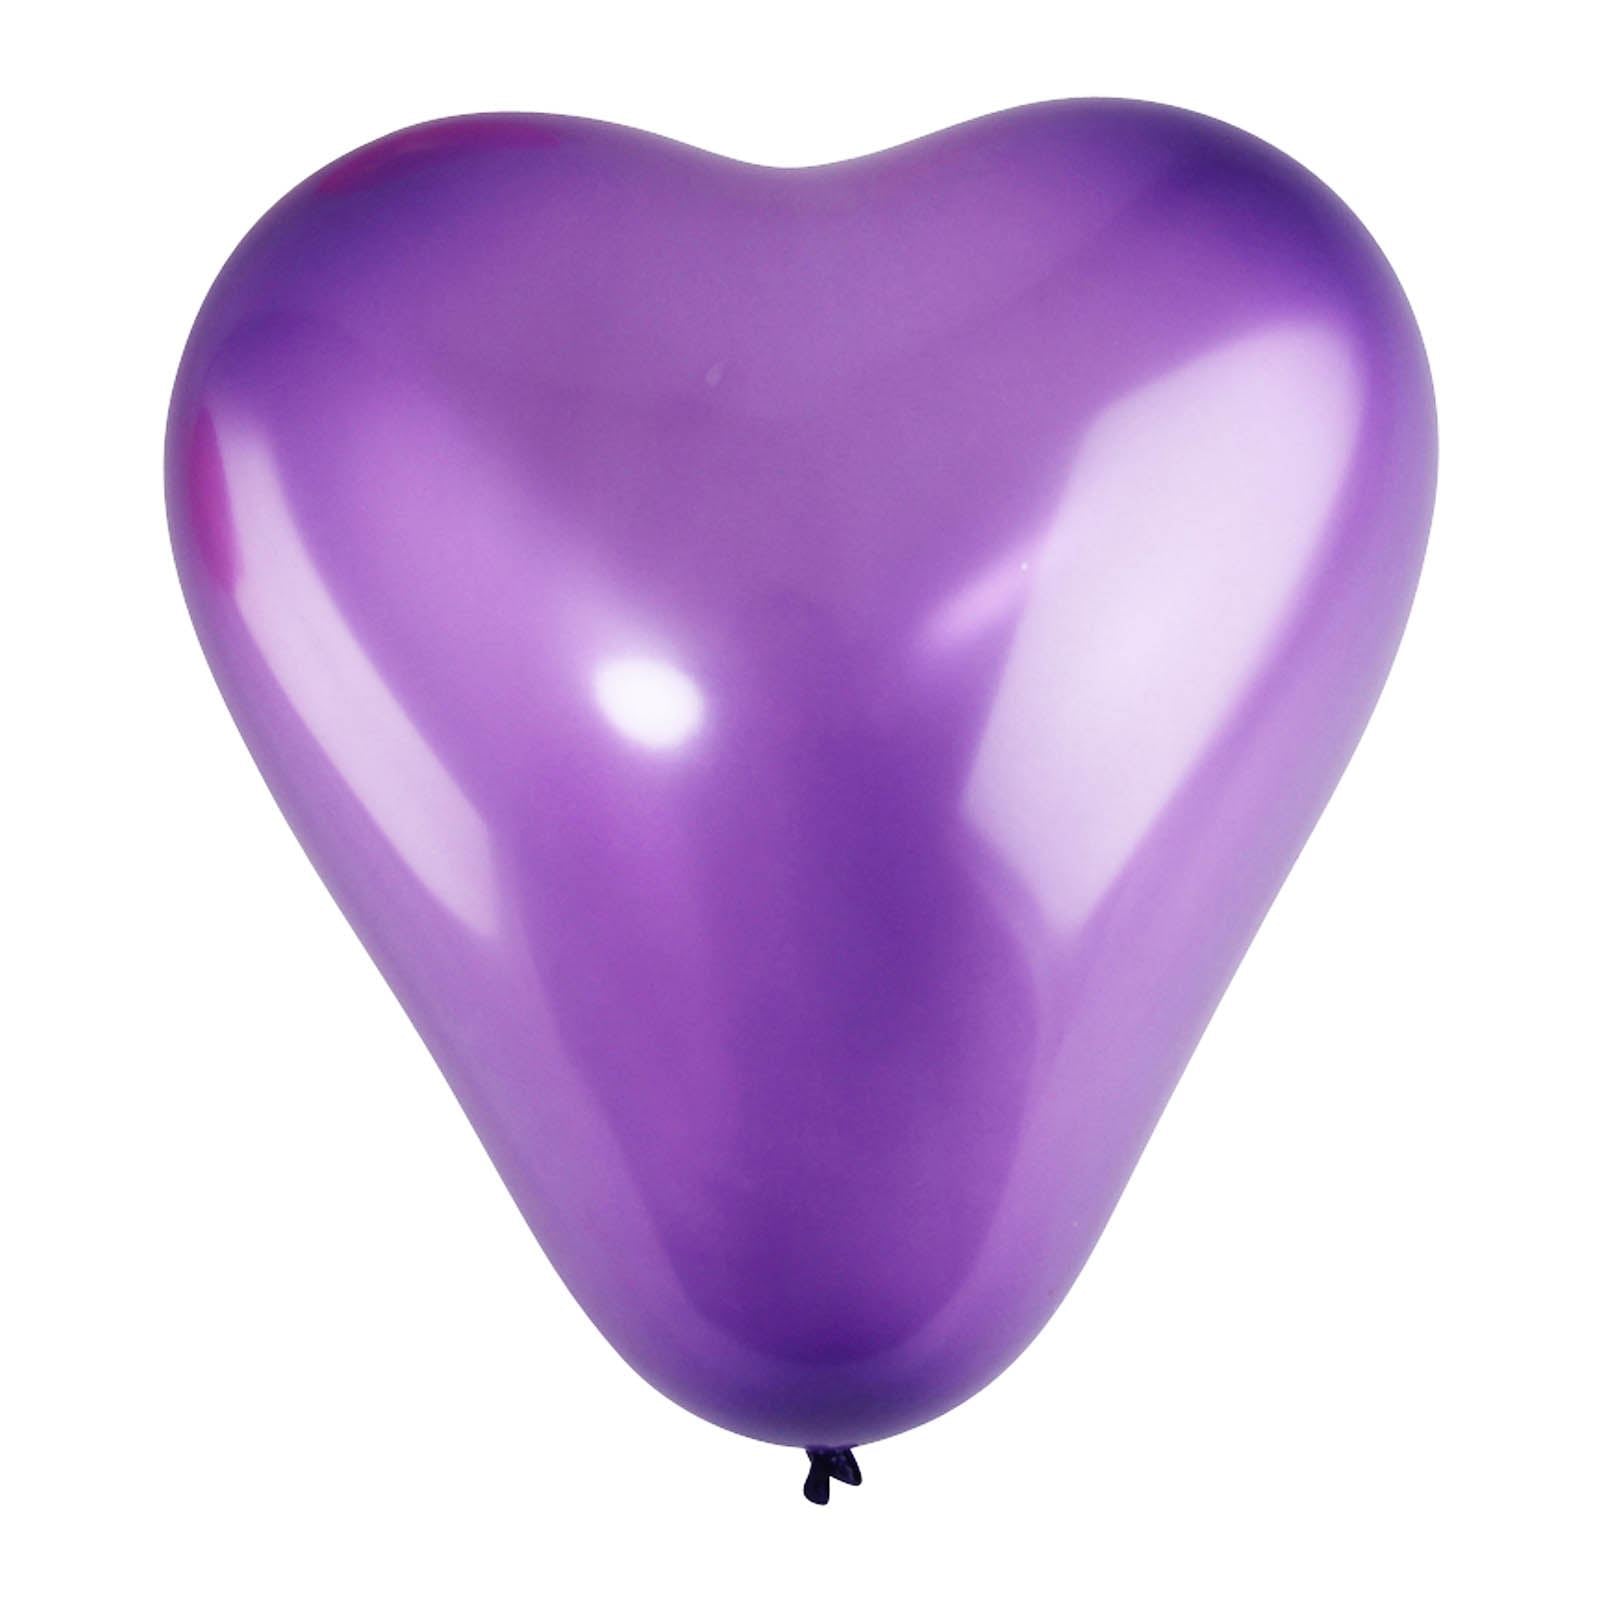 75x Assorted Heart Latex Balloons